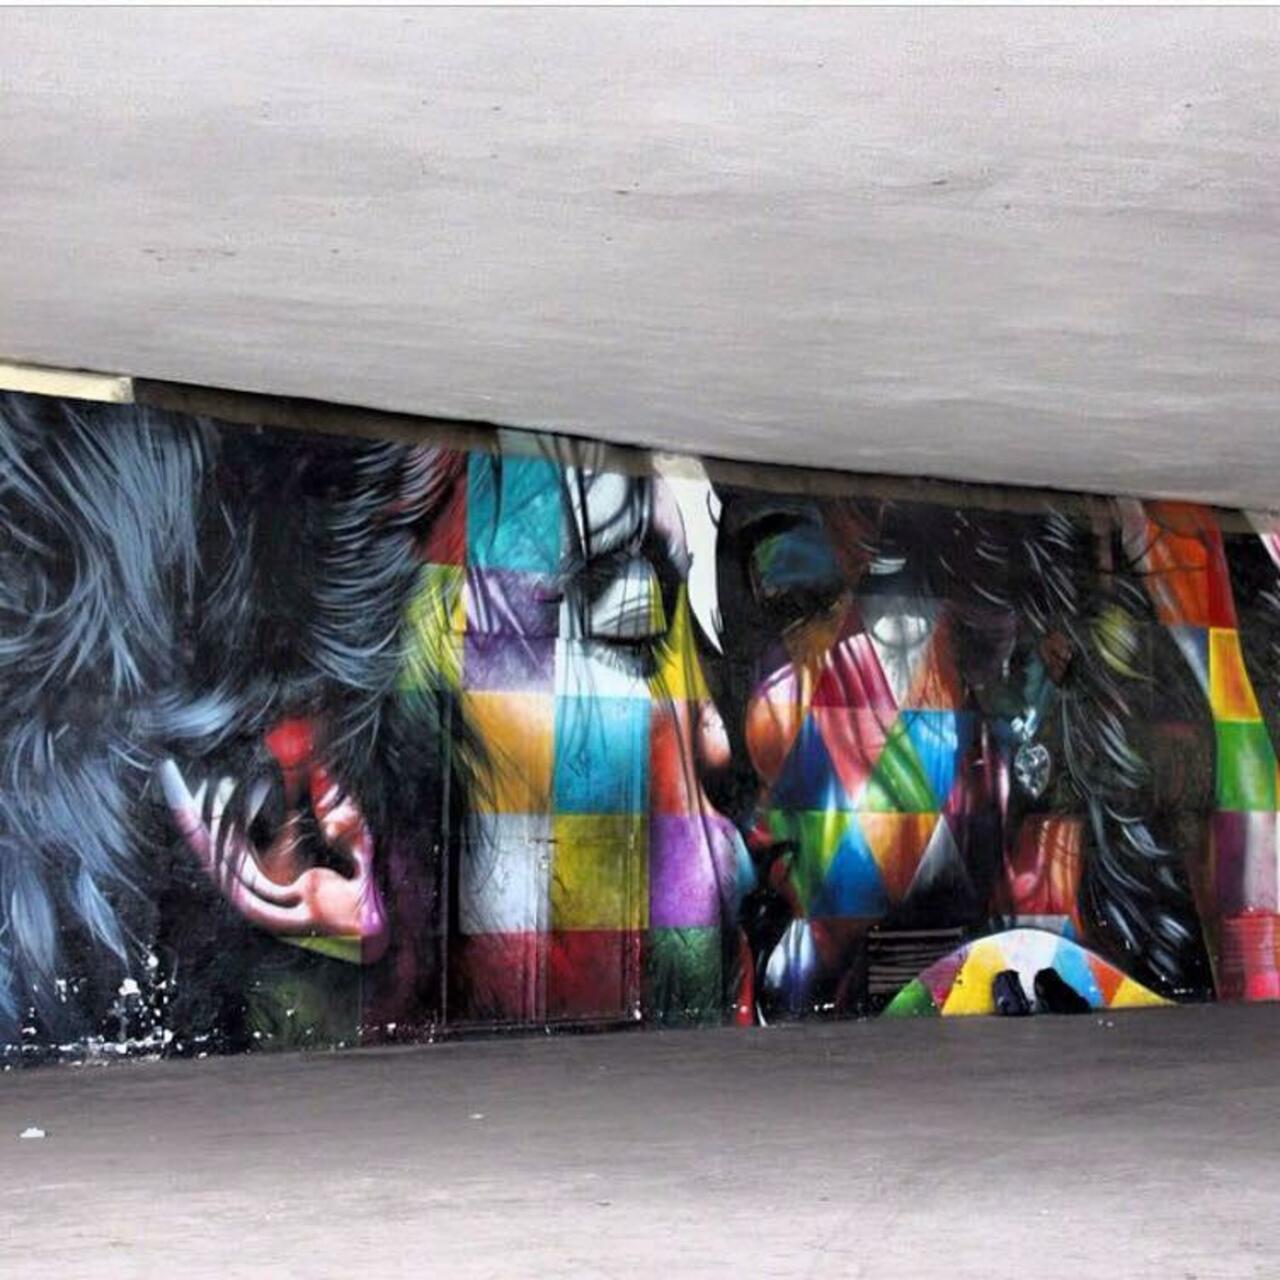 "@GoogleStreetArt: New Street Art by the brilliant Eduardo Kobra 
#art #mural #graffiti #streetart http://t.co/wXkn4bJpHZ"